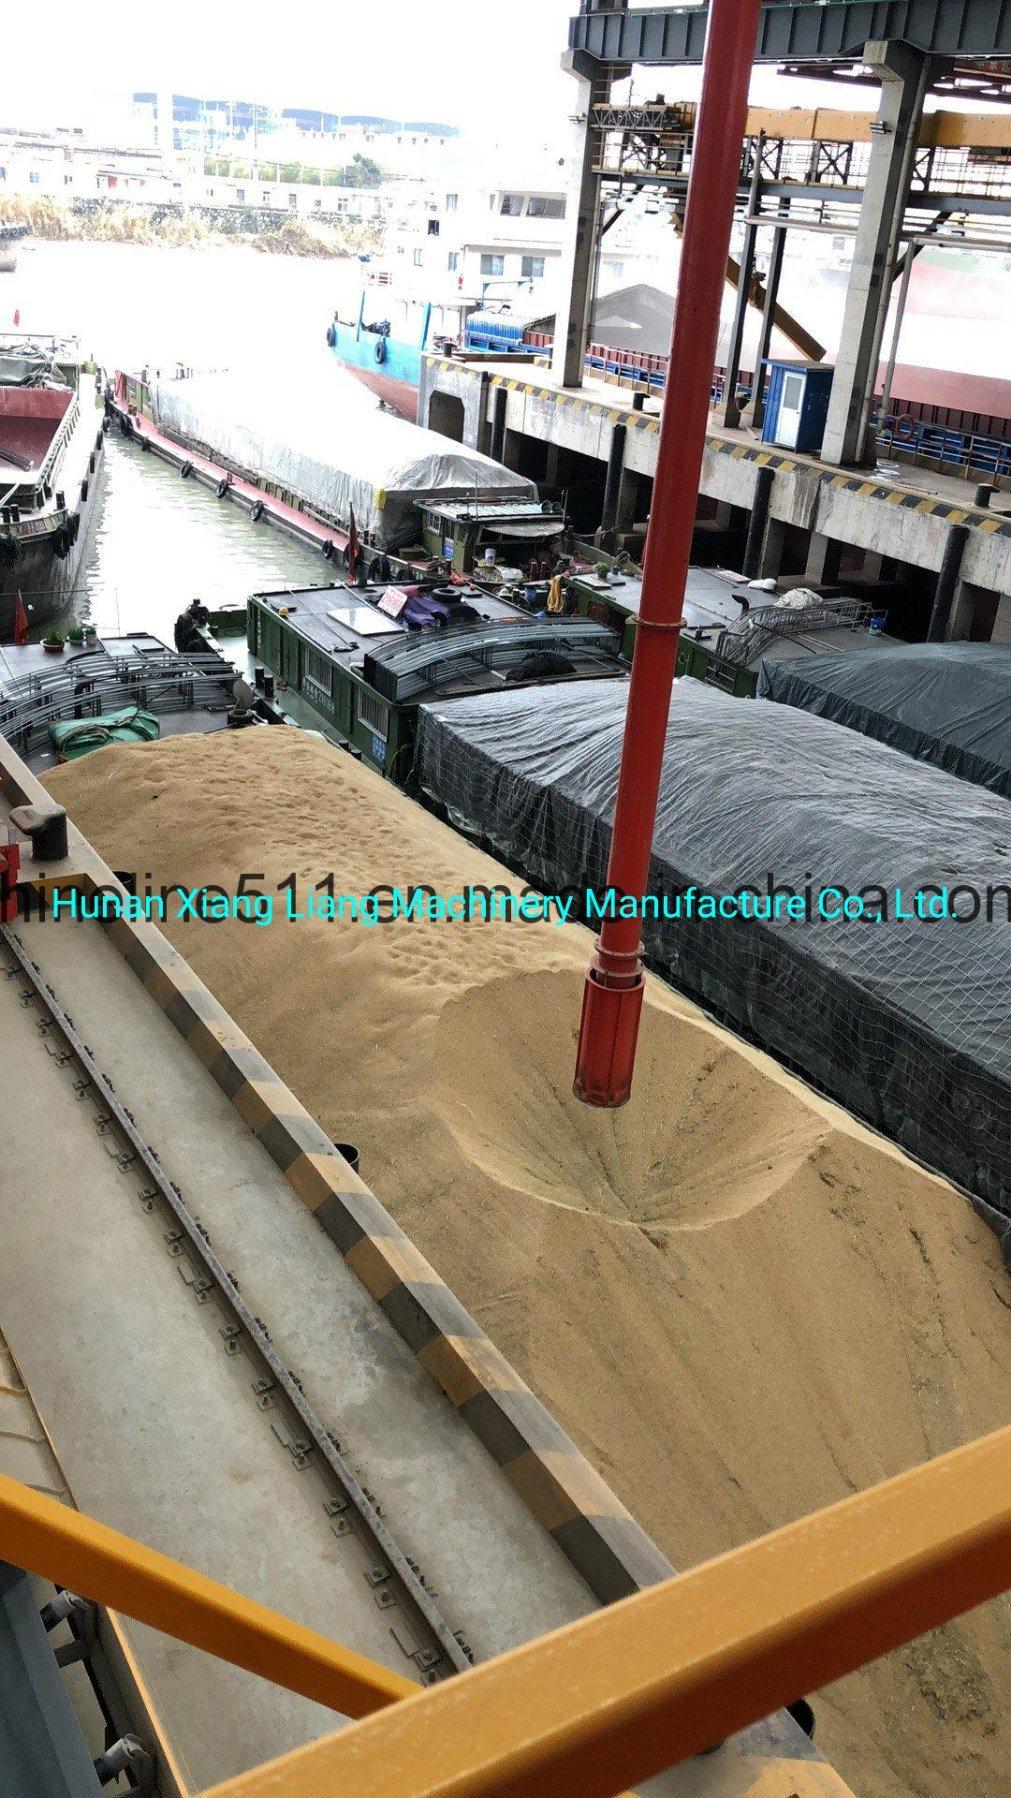 China Top Quality Mobile Grain Pump, Grain Loader and Unloaders